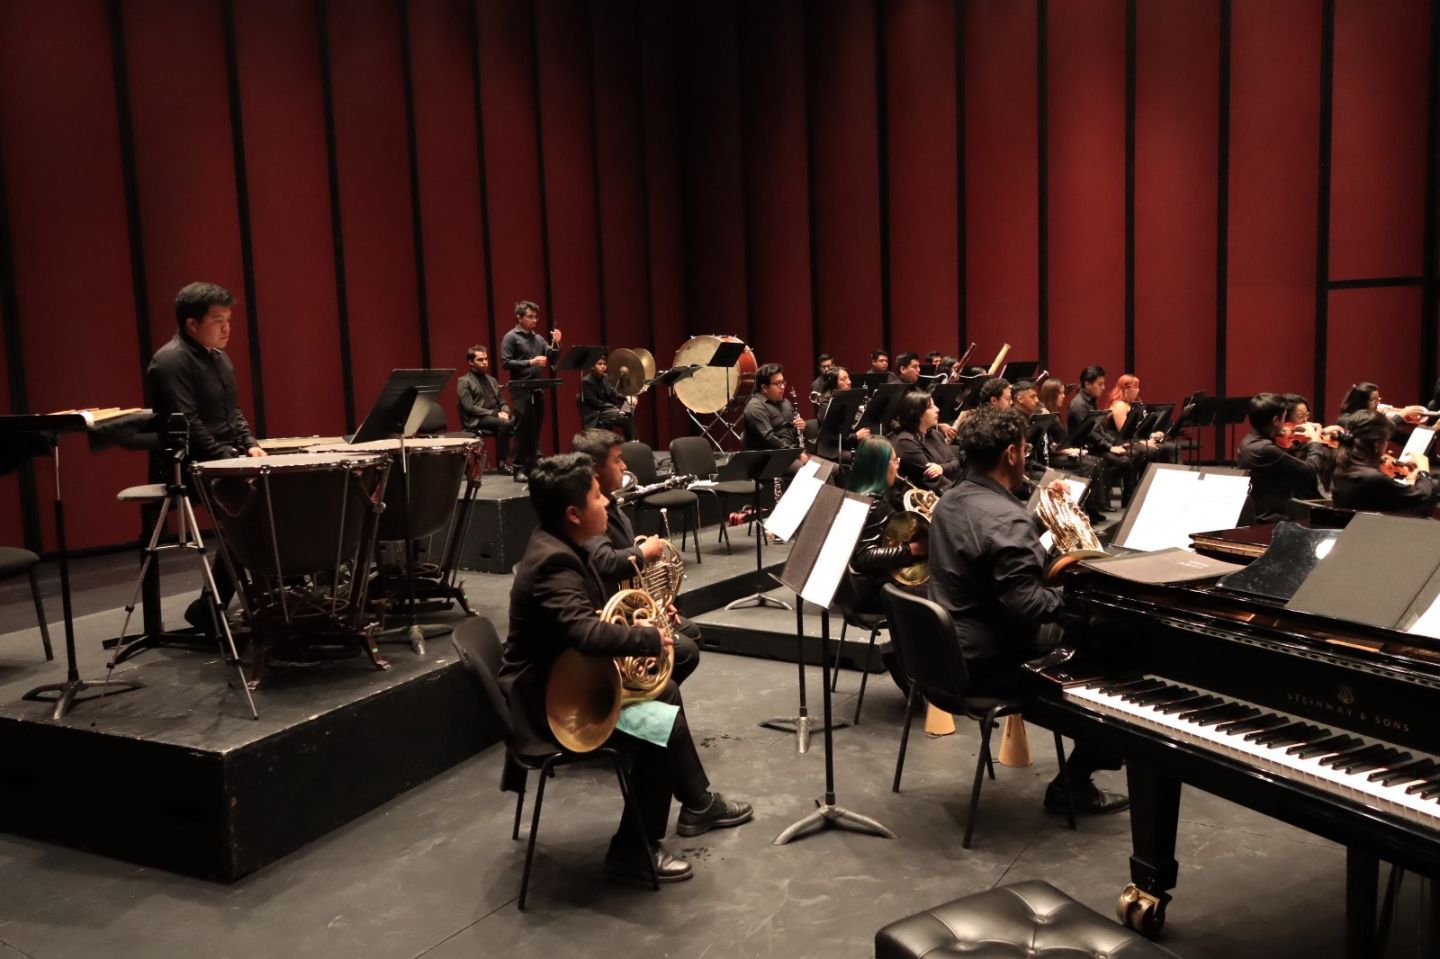 Presenta orquesta filarmónica mexiquense ’tributo a mujeres’ en el centro cultural mexiquense Texcoco 